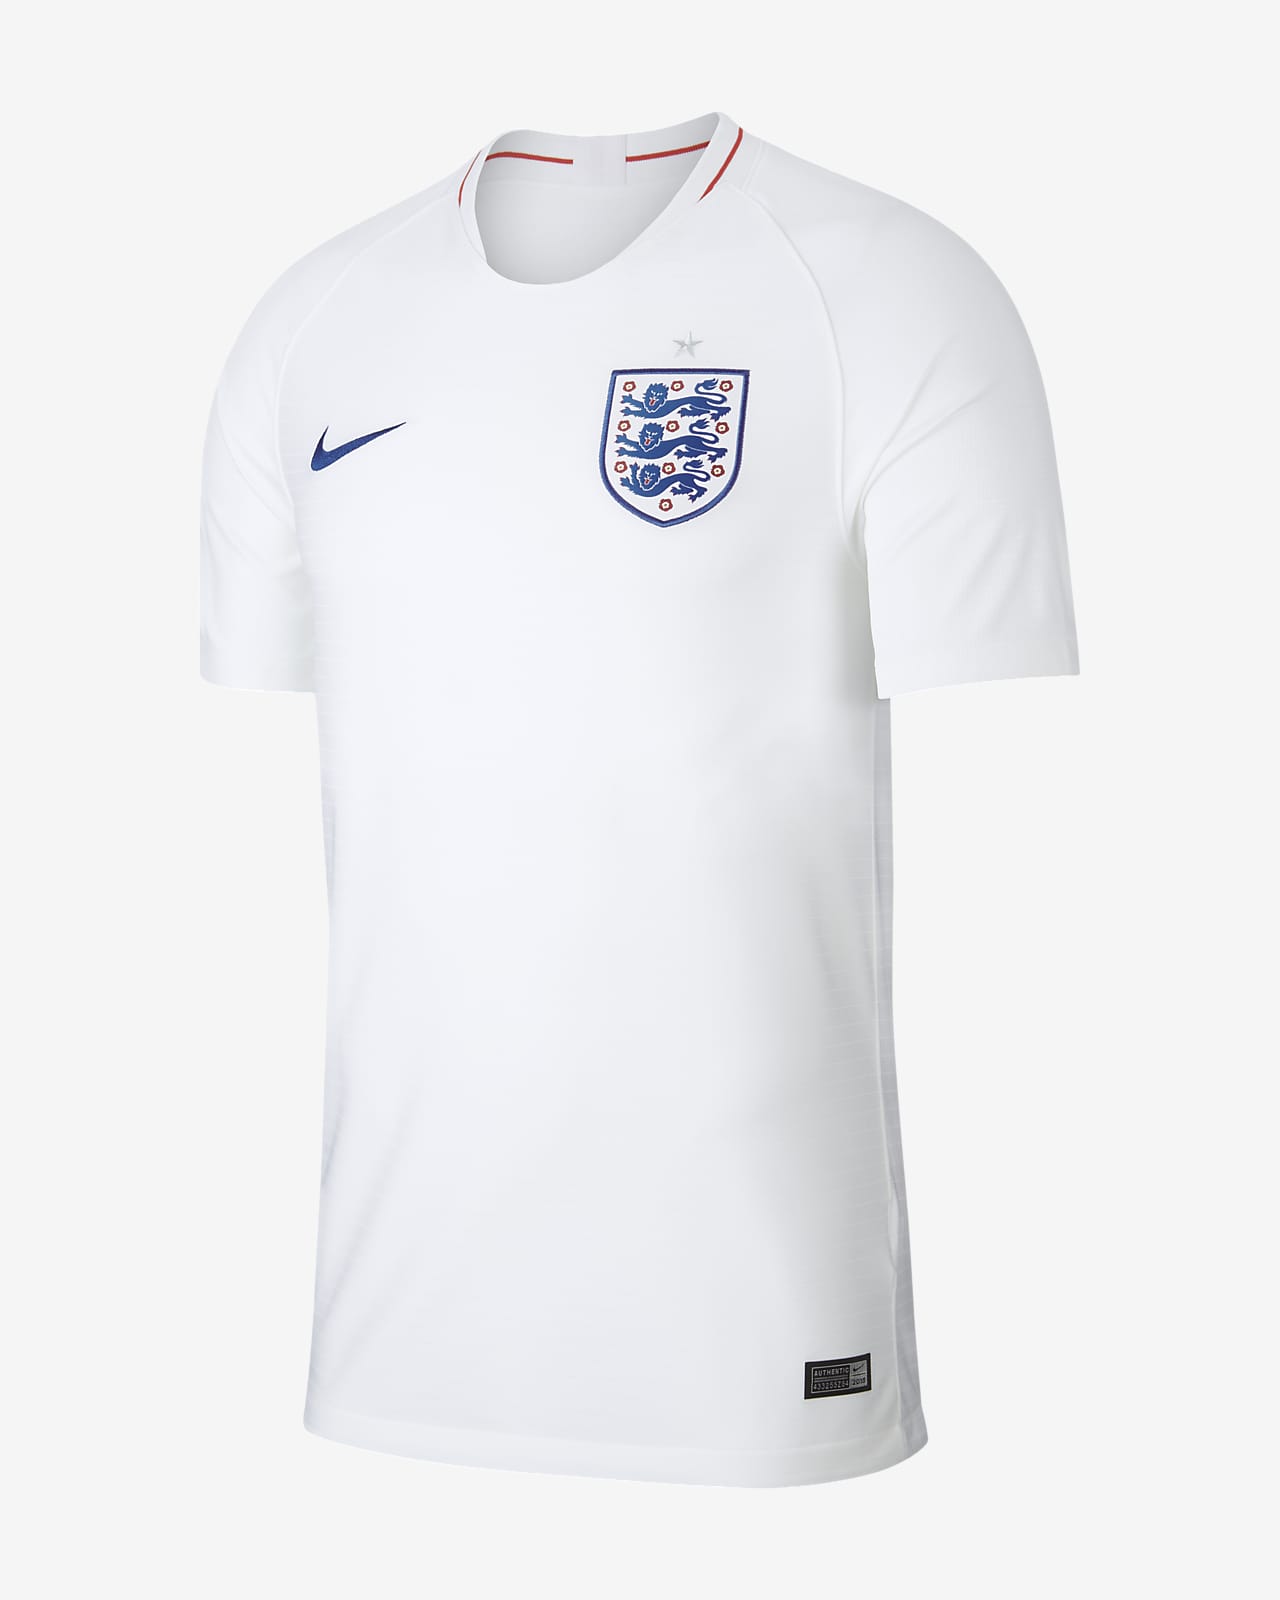 england football jersey 2018